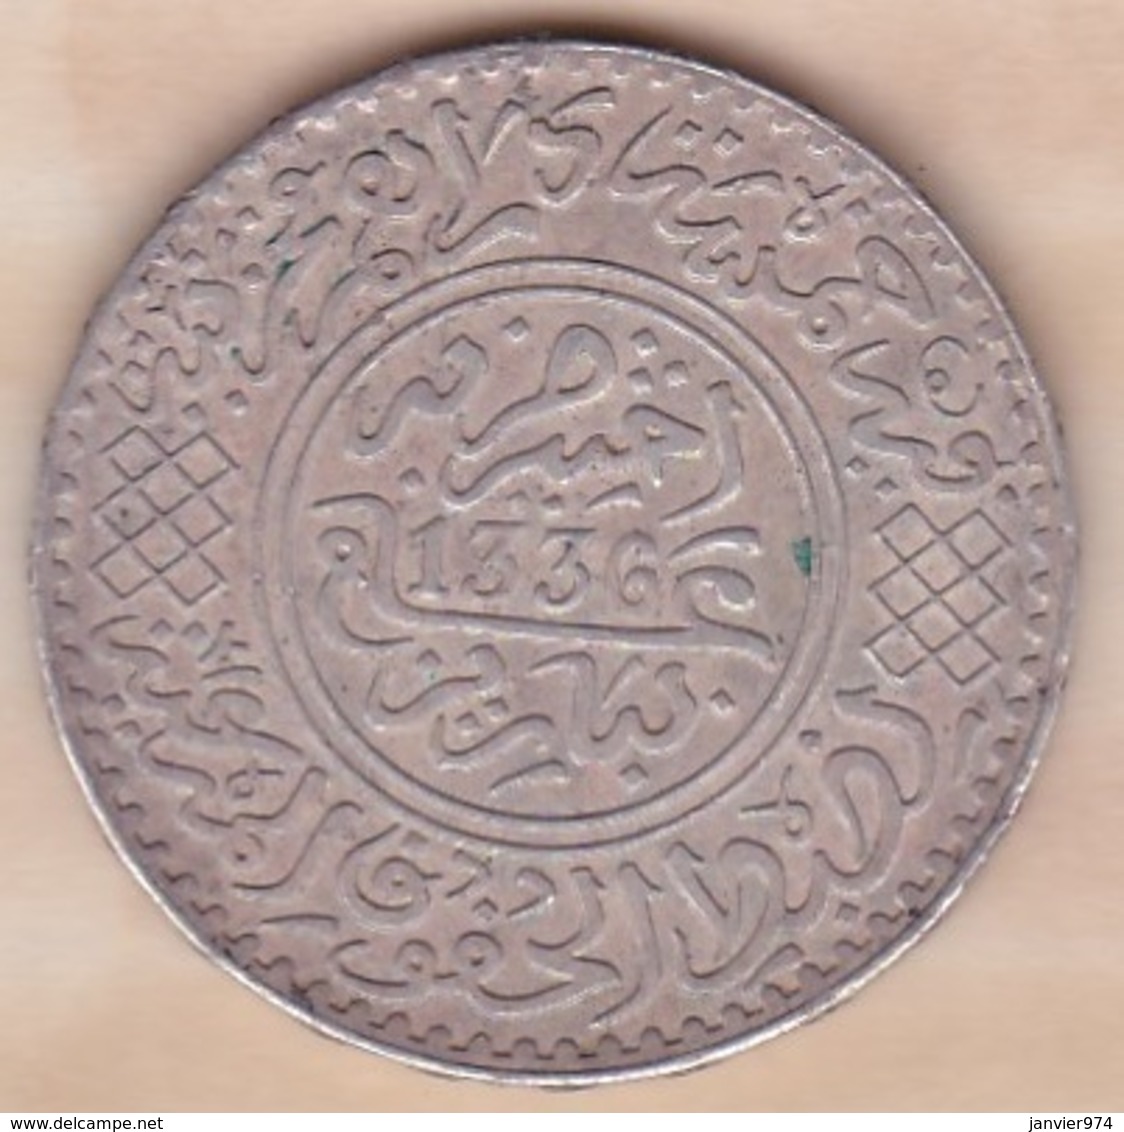 Maroc. 5 Dirhams (1/2 Rial) AH 1336 Paris. Yussef I. ARGENT - Morocco